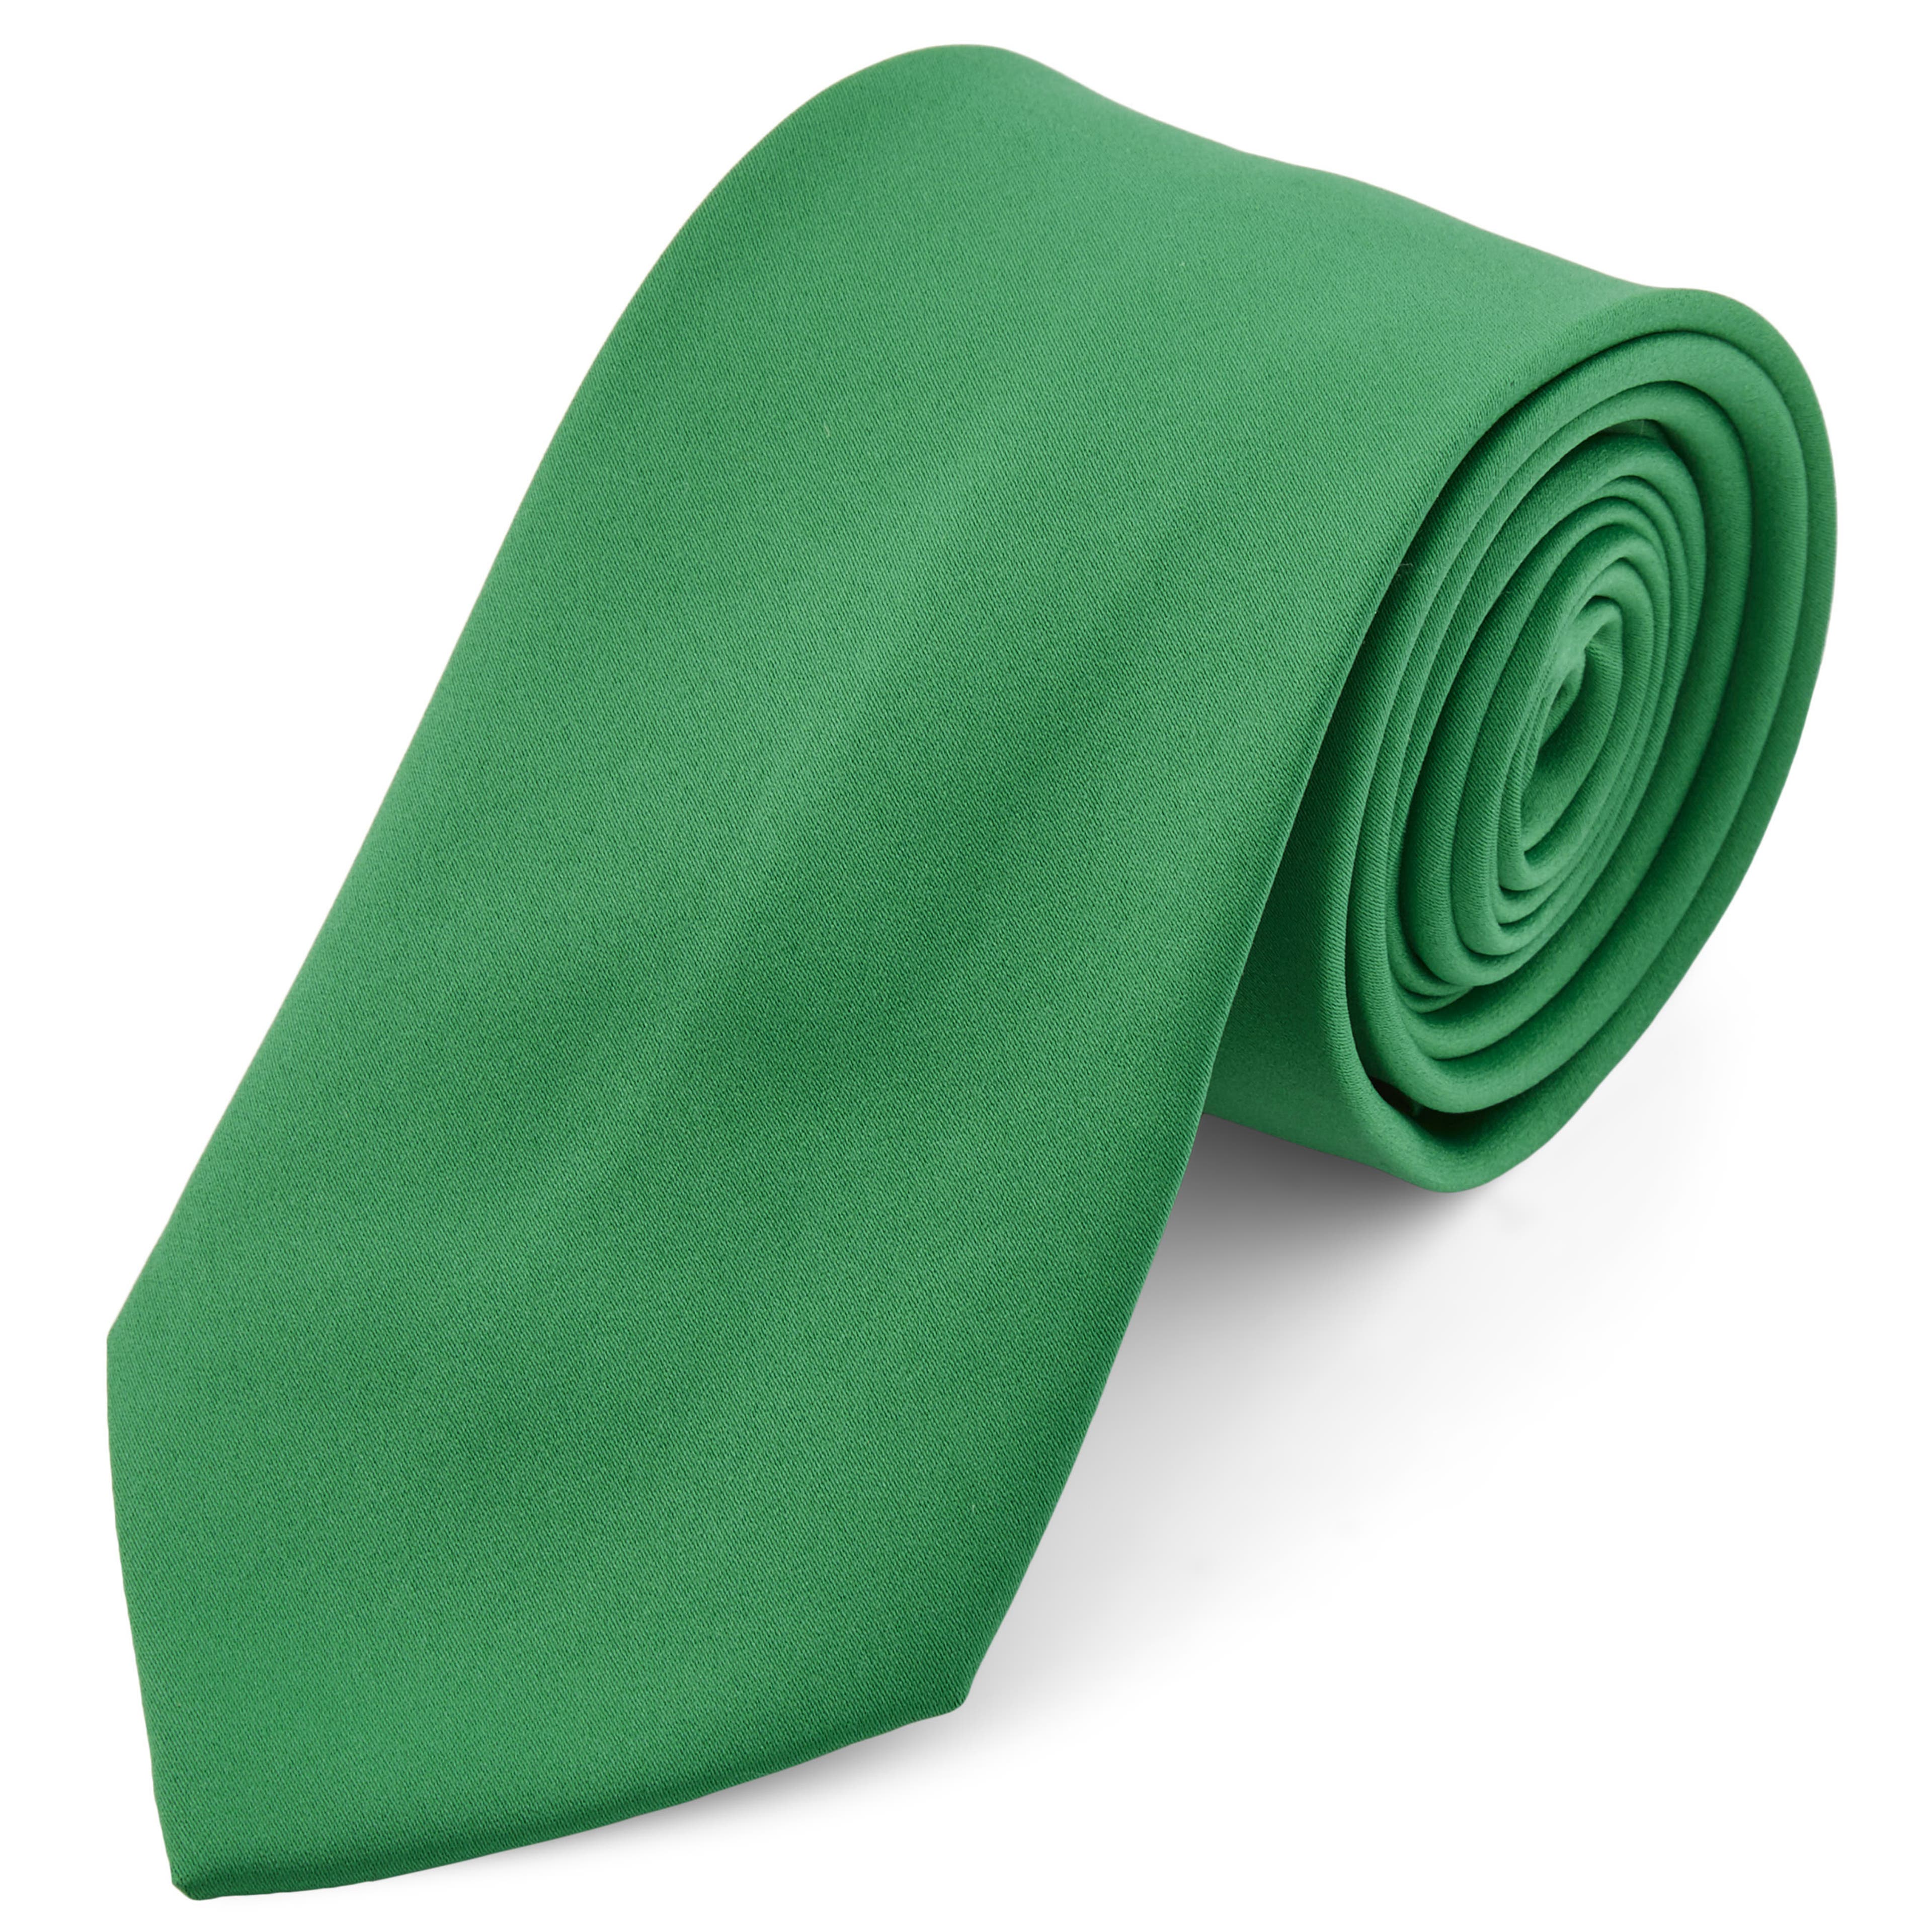 Едноцветна изумруденозелена вратовръзка 8 см 